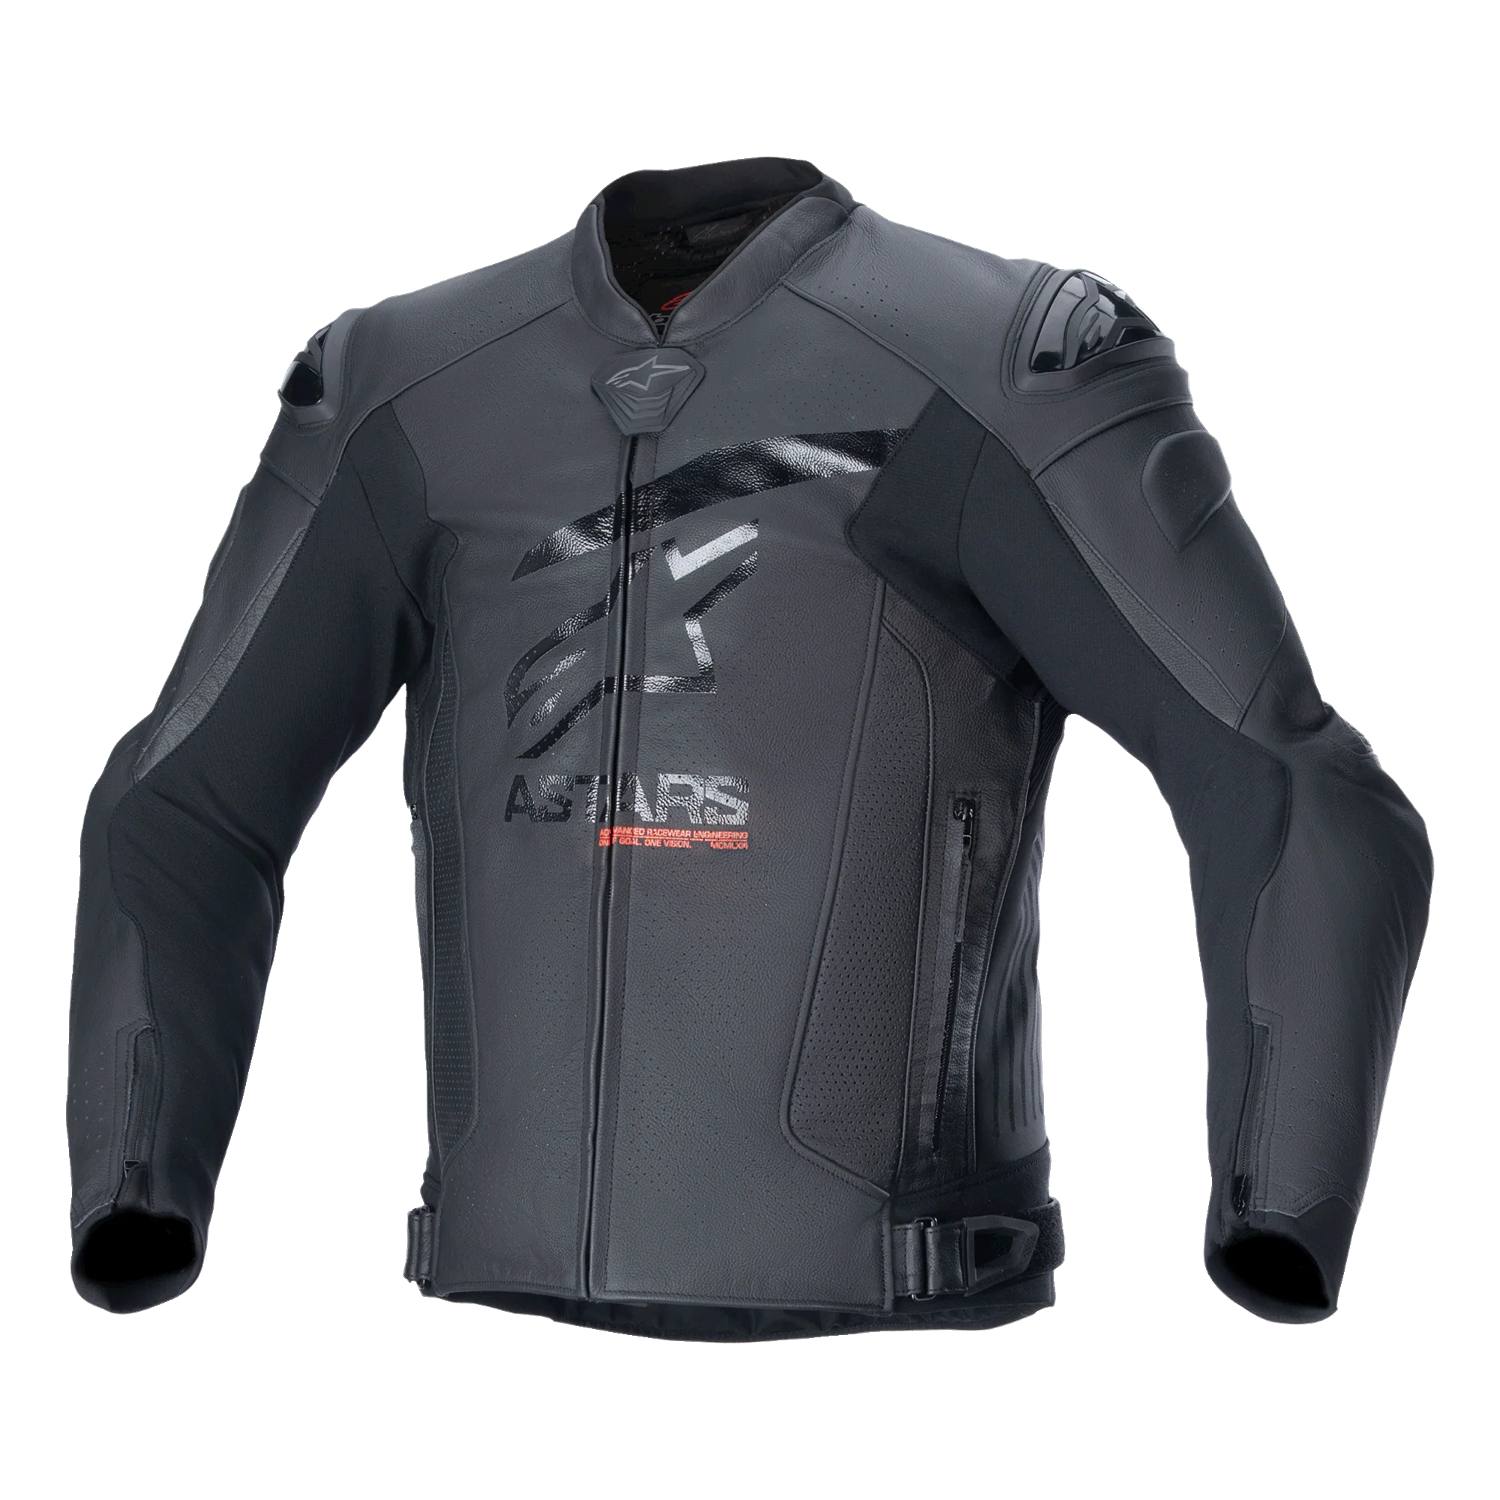 Image of Alpinestars Gp Plus R V4 Airflow Leather Jacket Black Size 54 ID 8059347339580